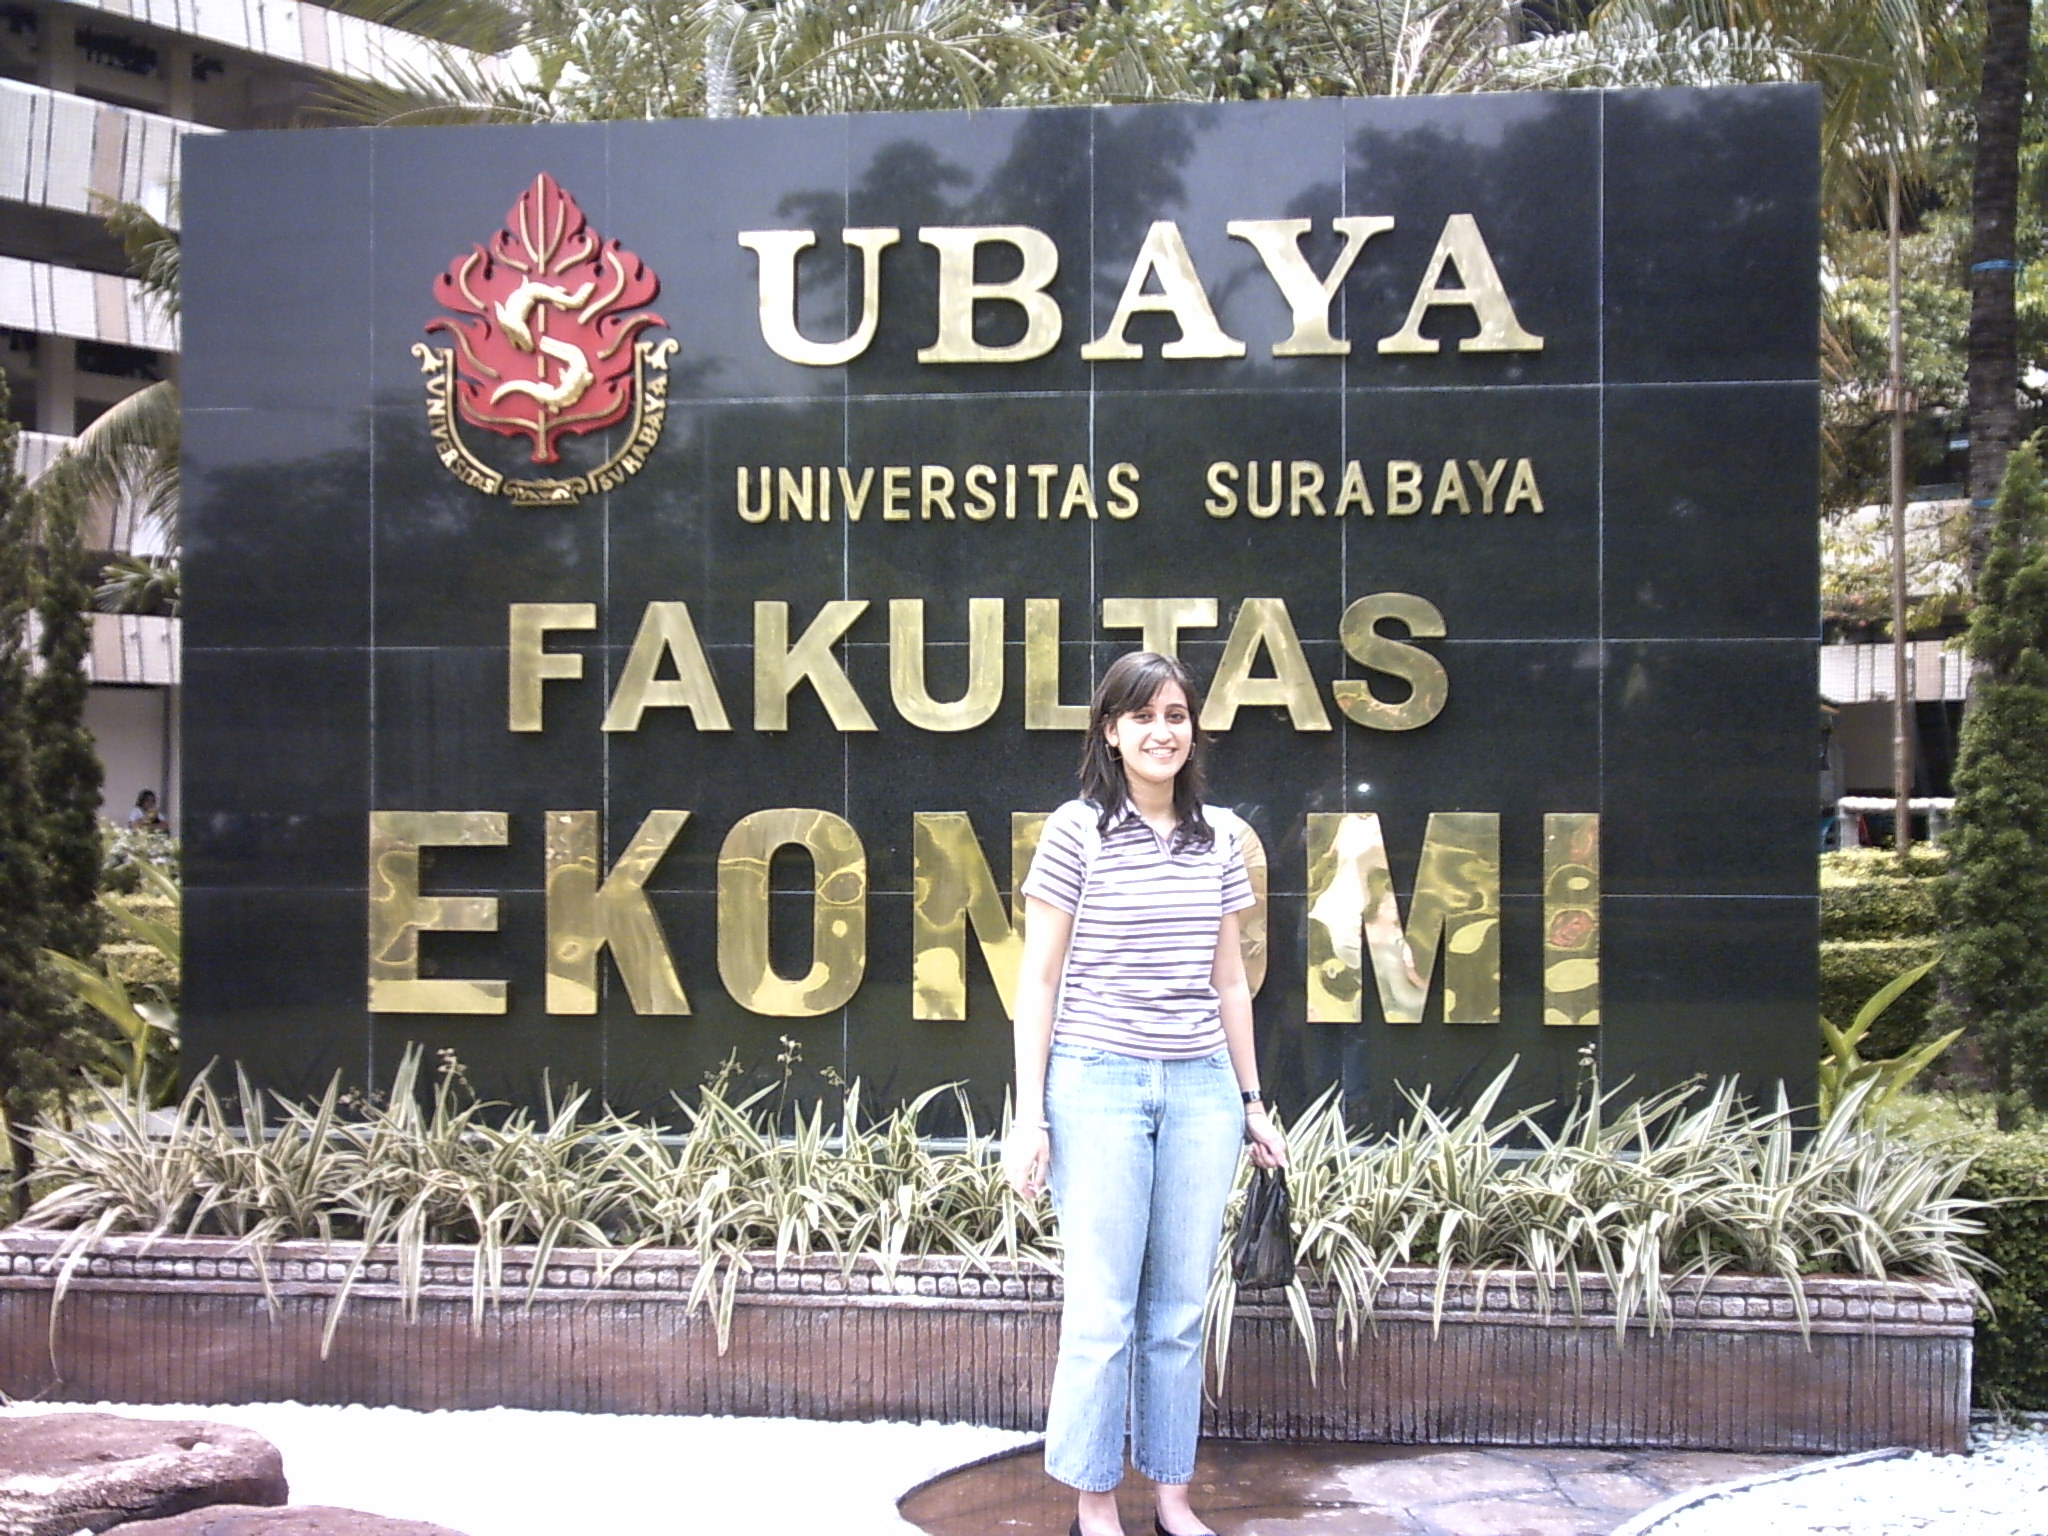 University Surabaya (c) Charlene Vodegel 2006